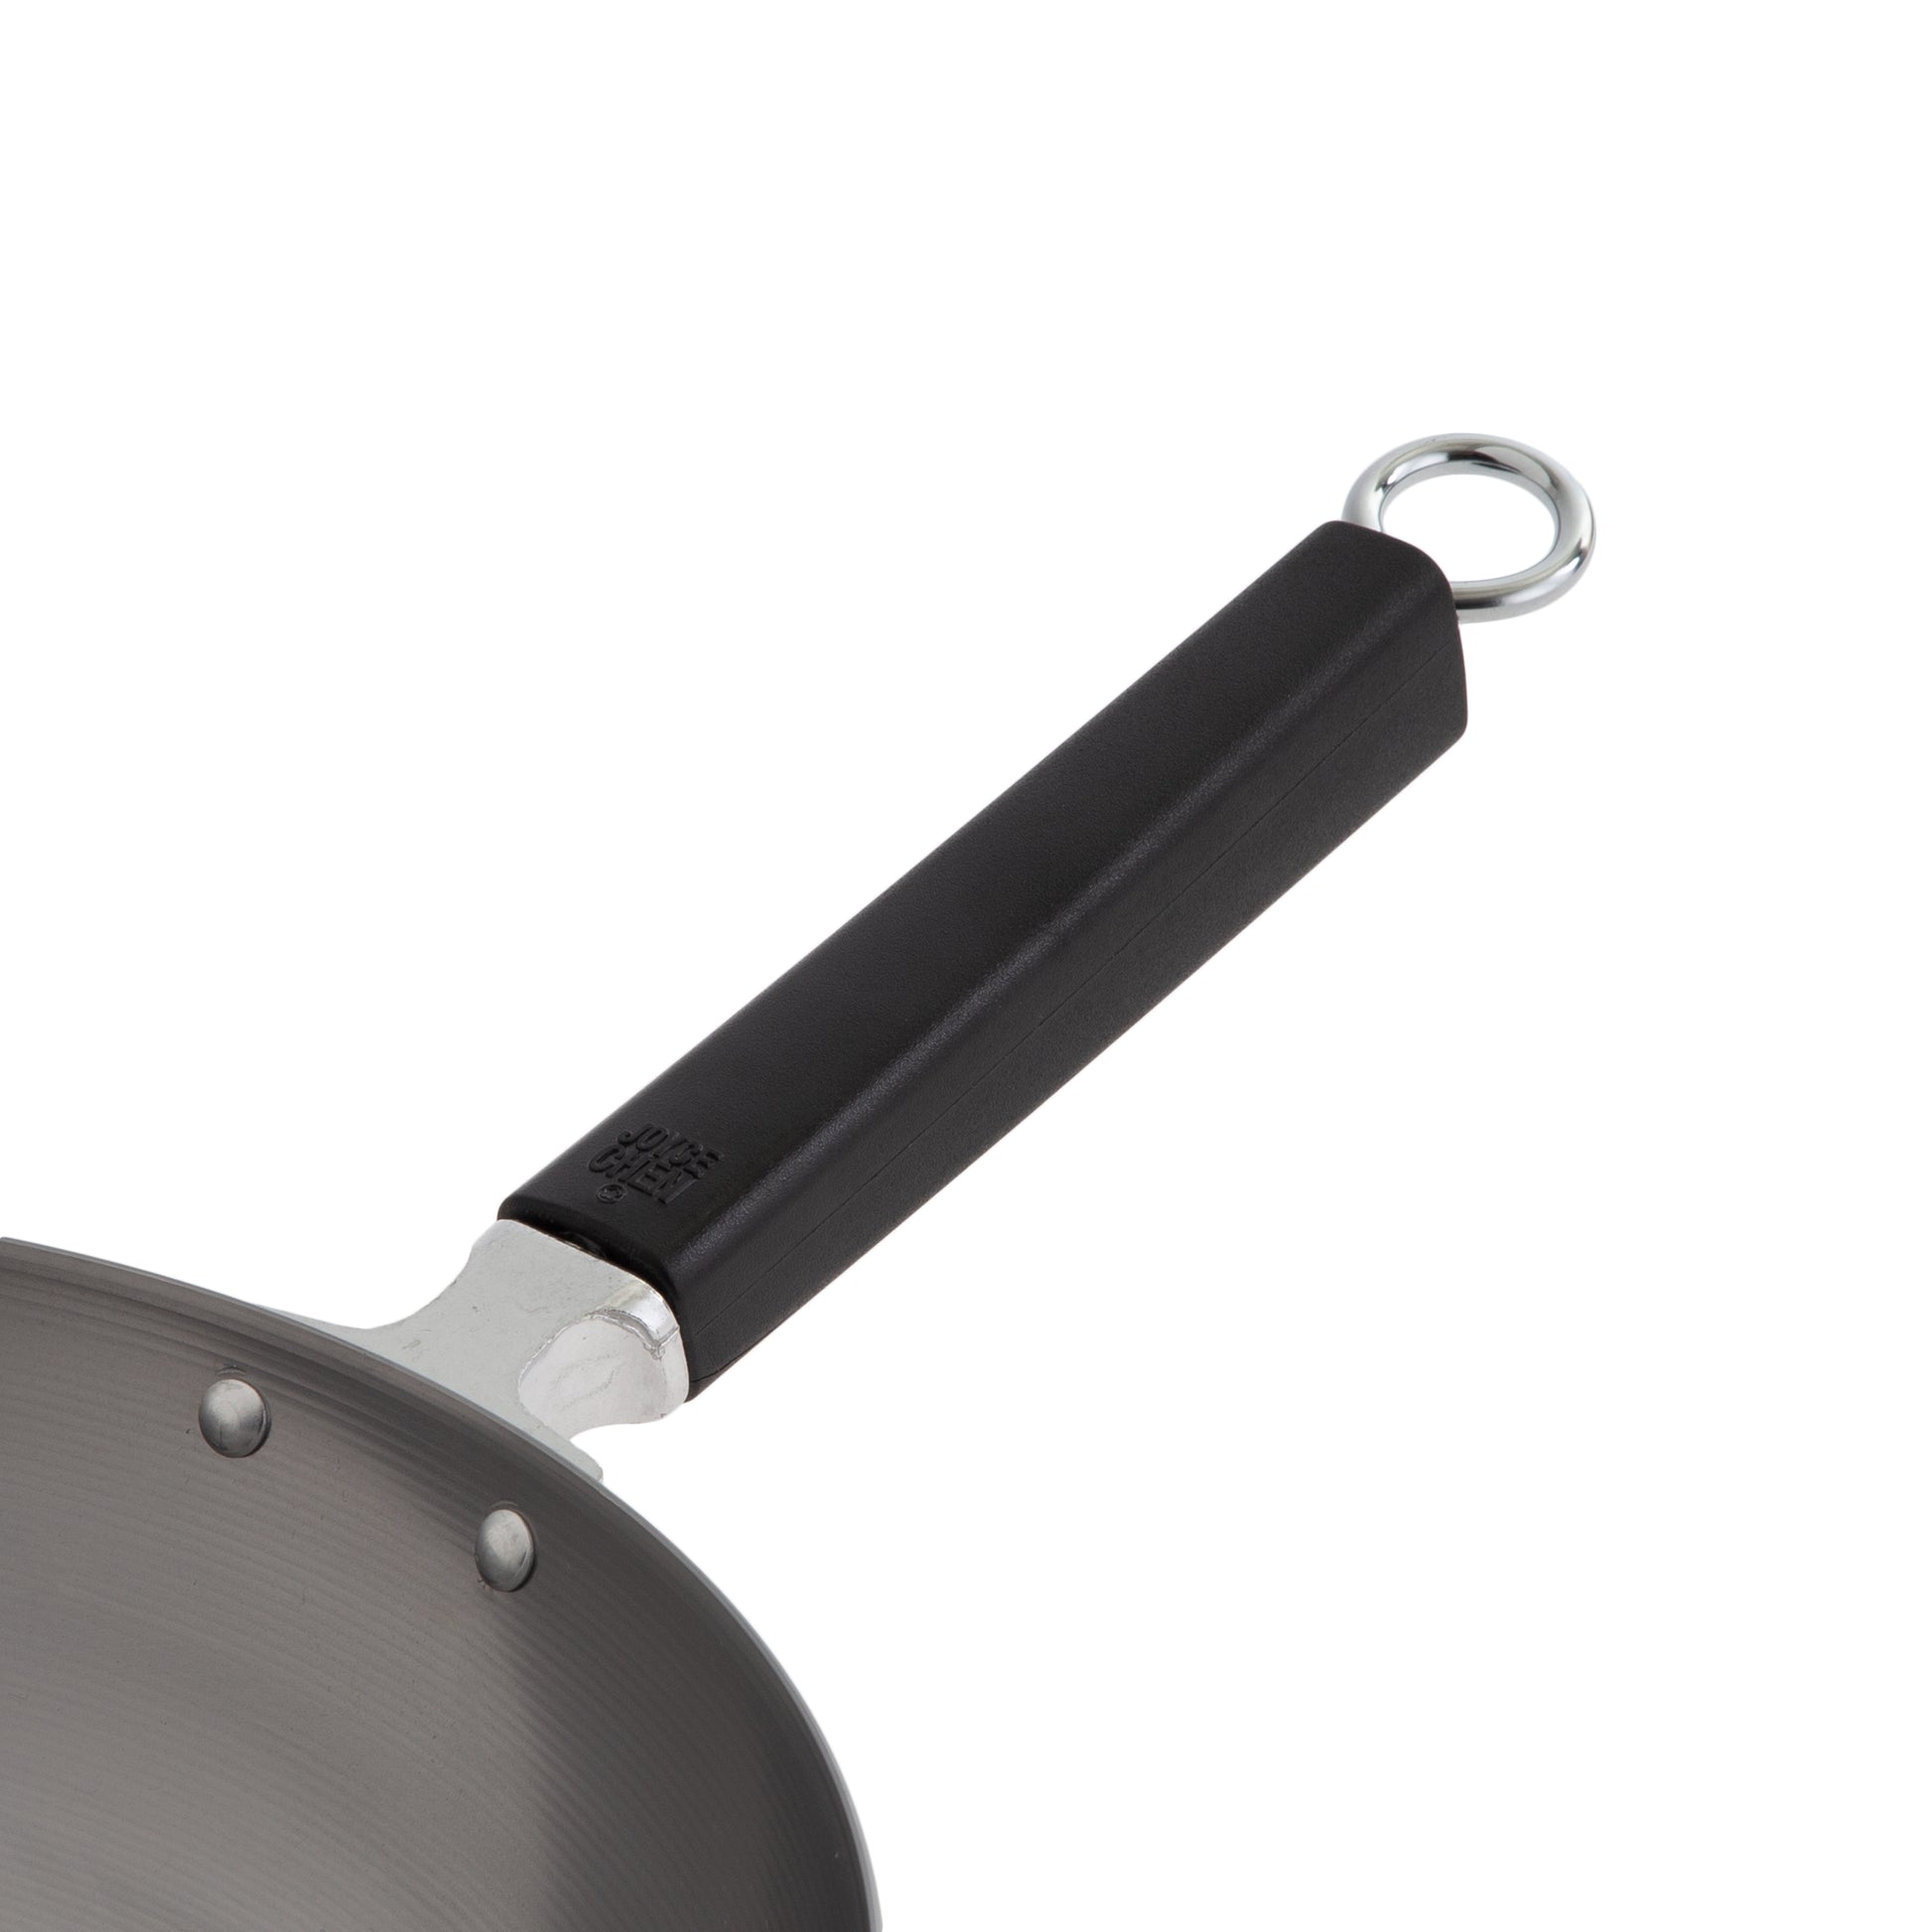 Joyce Chen Professional Series 12-Inch Carbon Steel Excalibur Nonstick Stir  Fry Pan with Phenolic Handle — Las Cosas Kitchen Shoppe